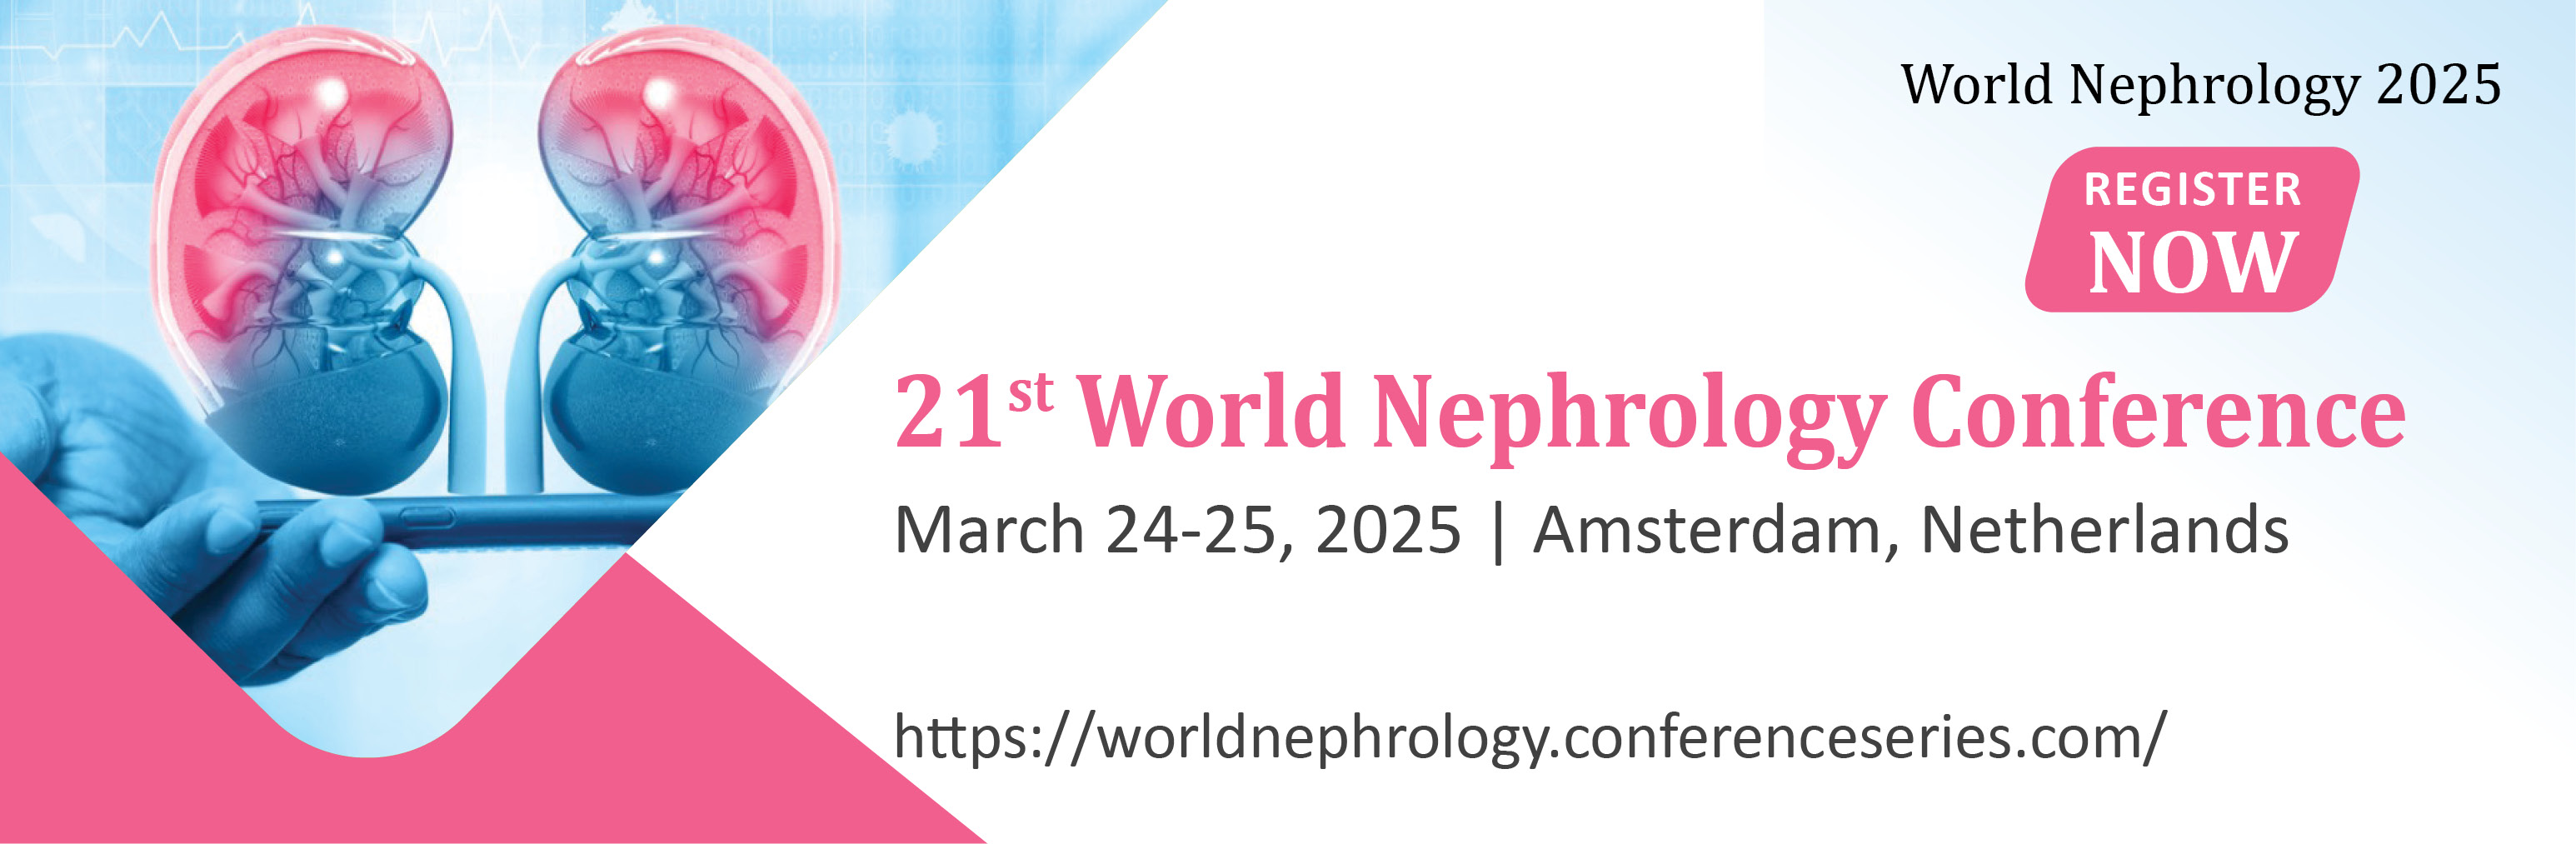 World Nephrology 2025